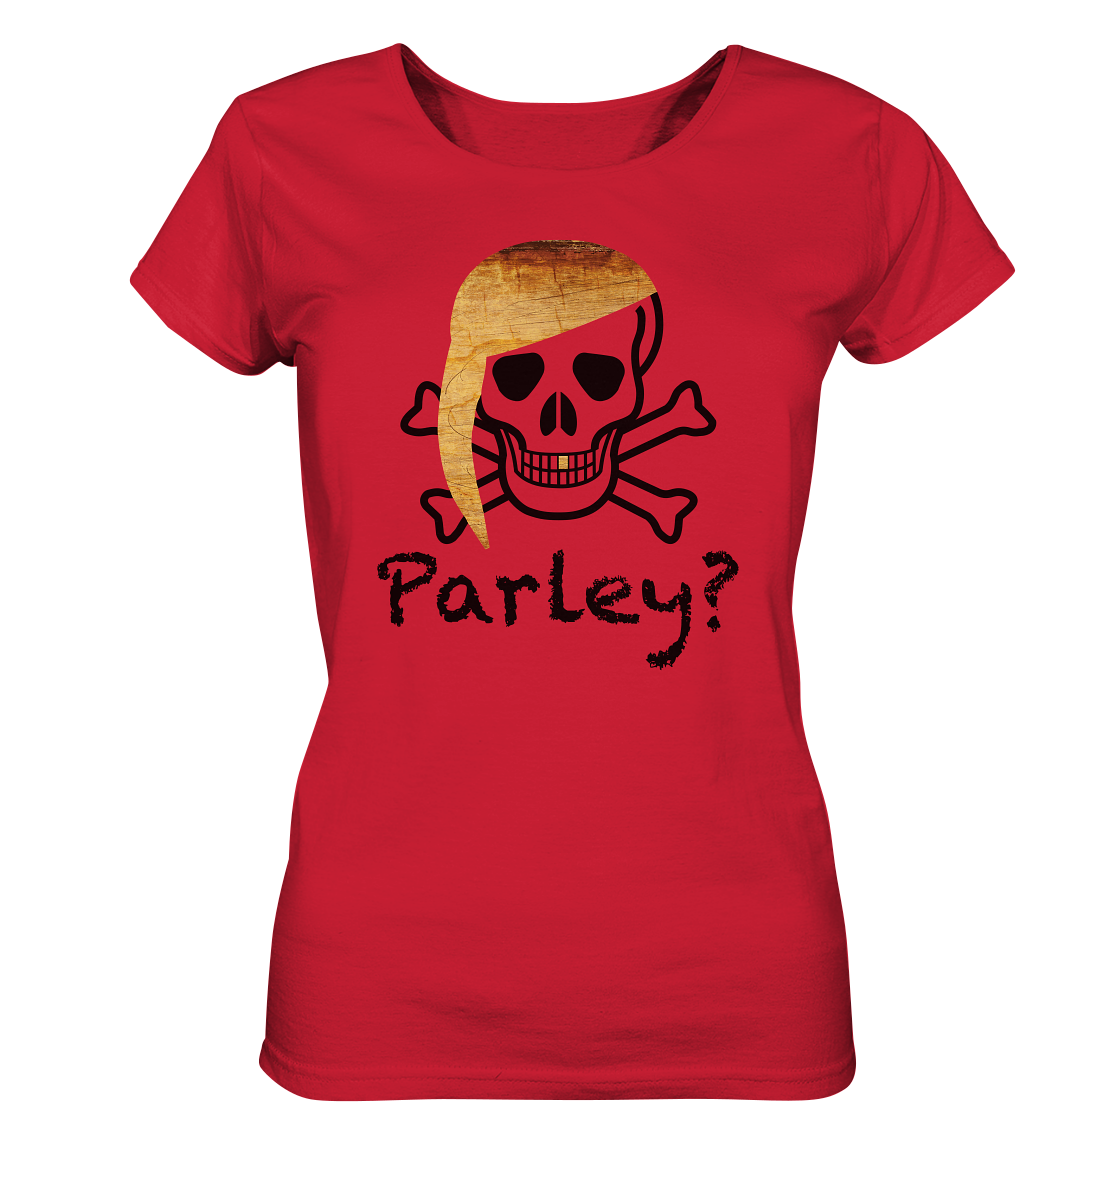 Parley? - Ladies Organic Shirt